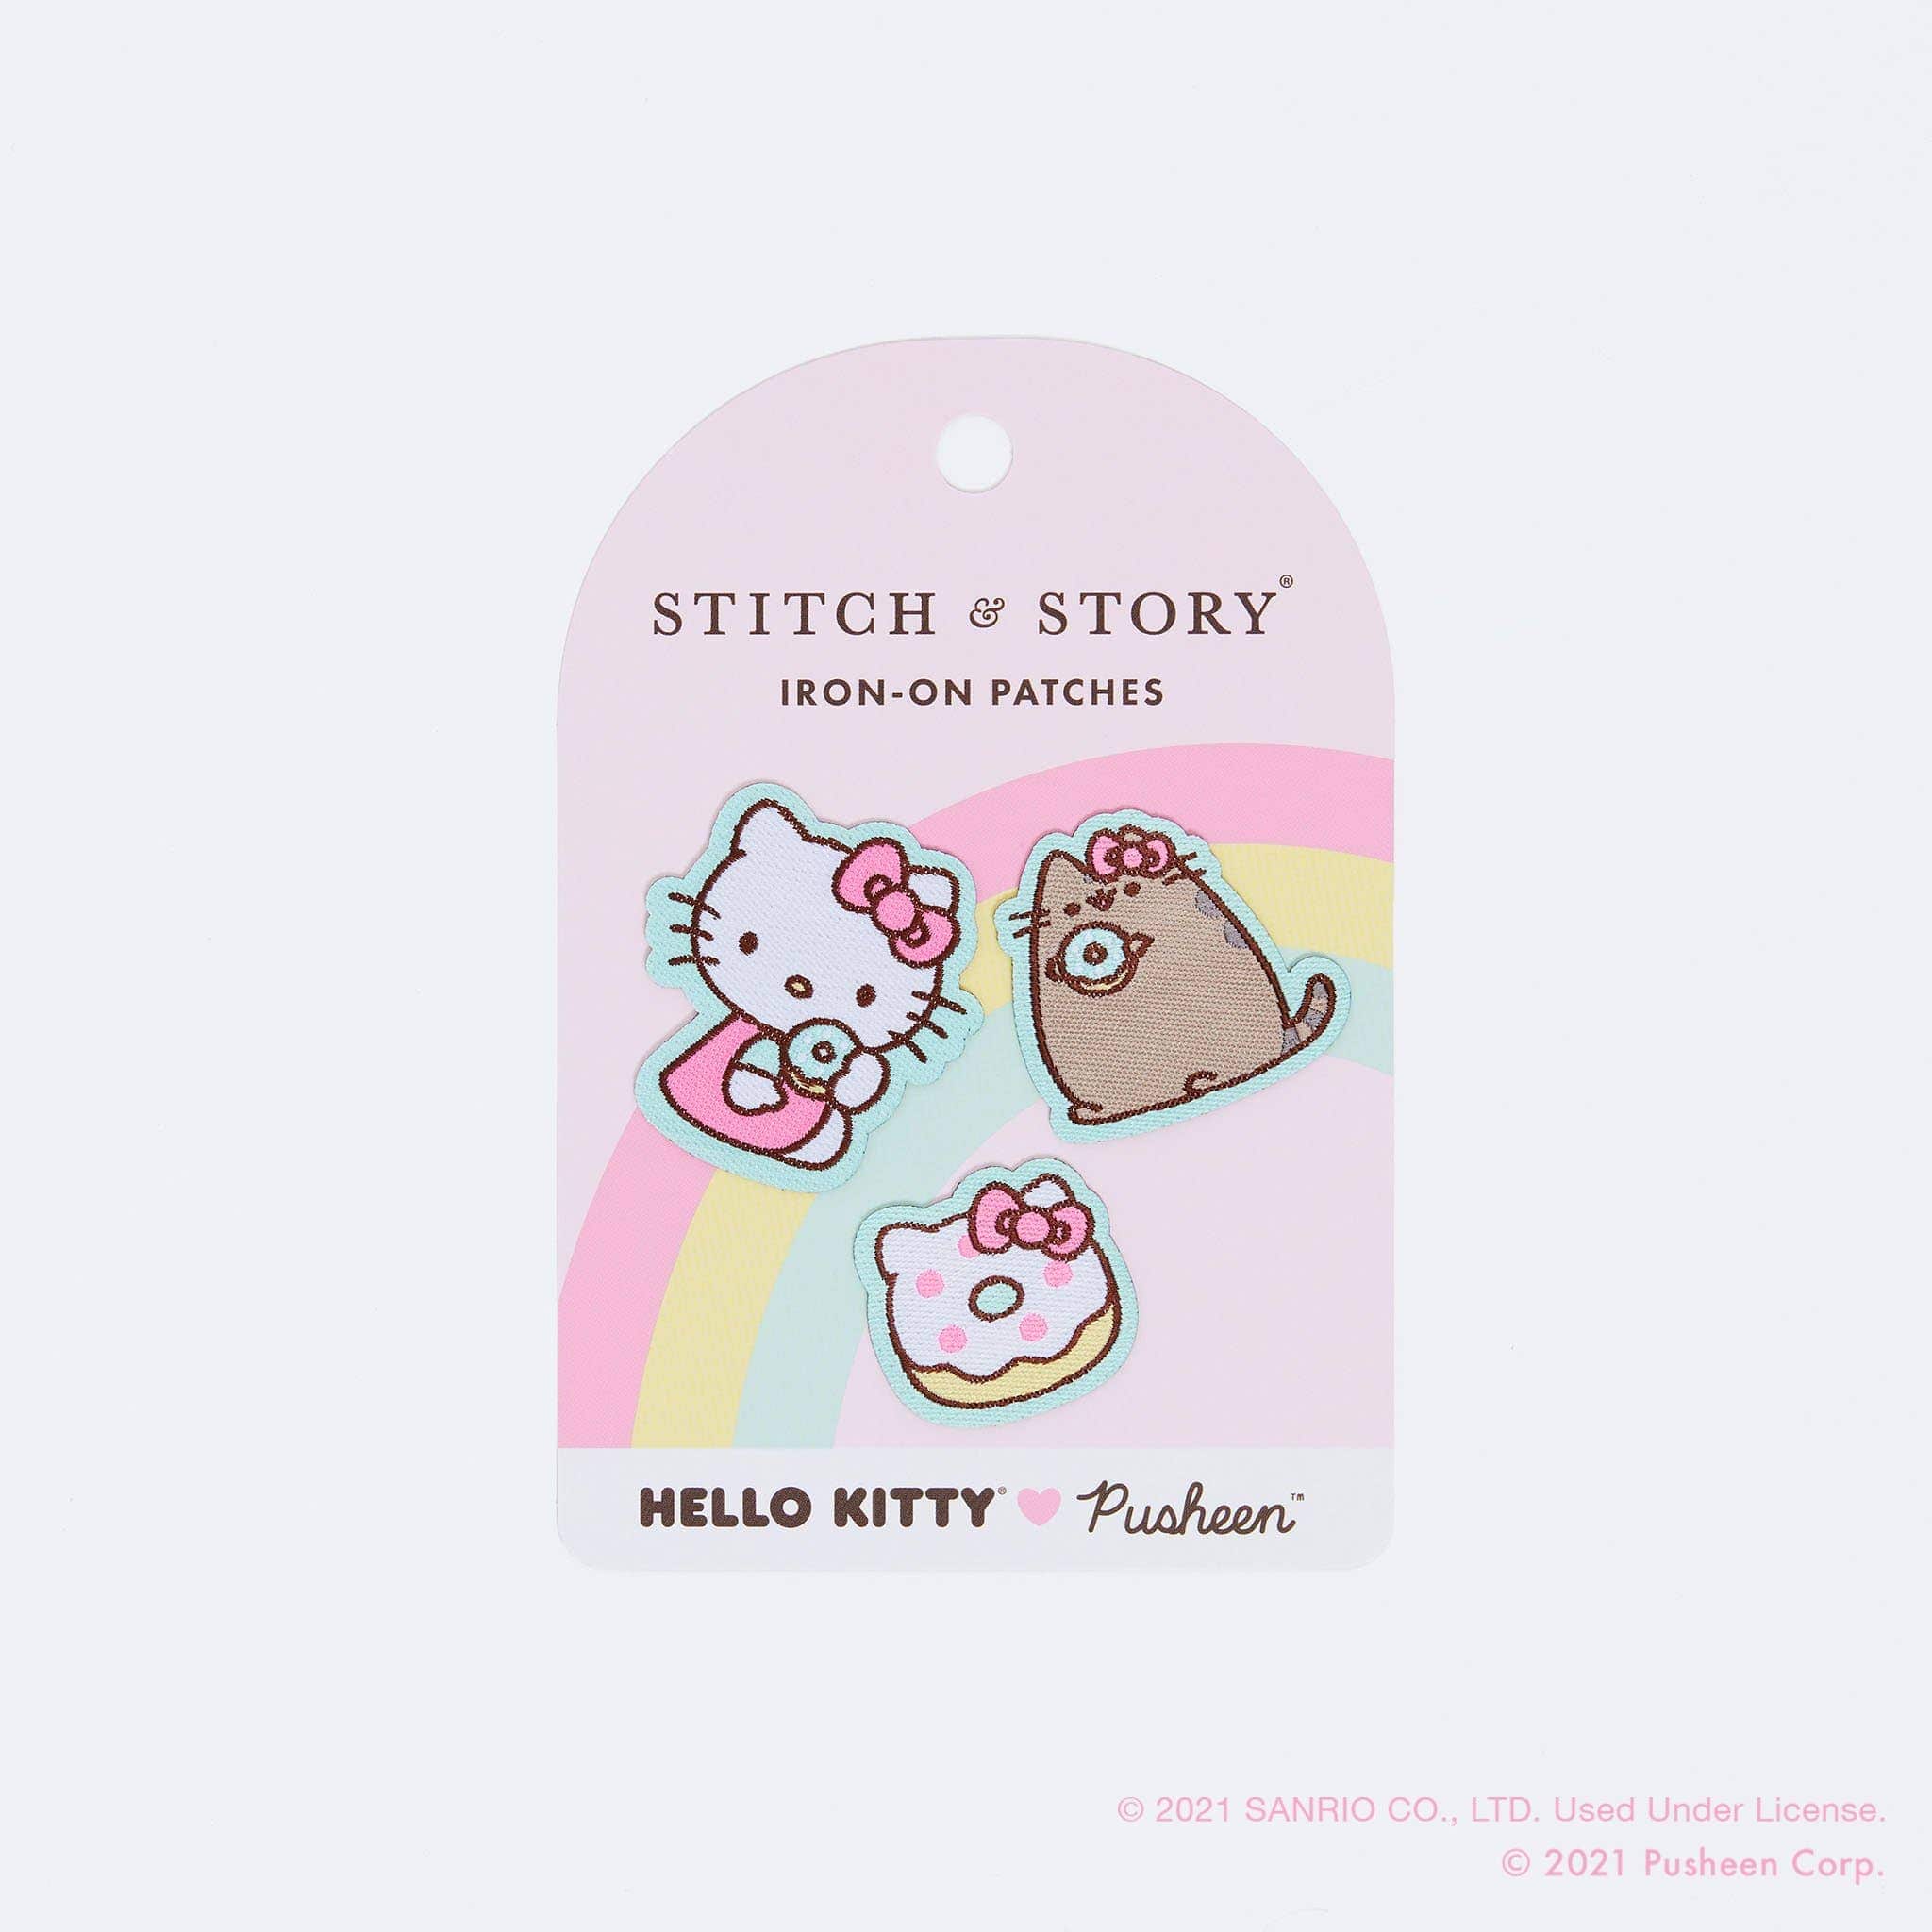 Stitch & Story Hello Kitty x Pusheen: Small Iron-On Patches (Set of 3) Kawaii Gifts 5060779006394